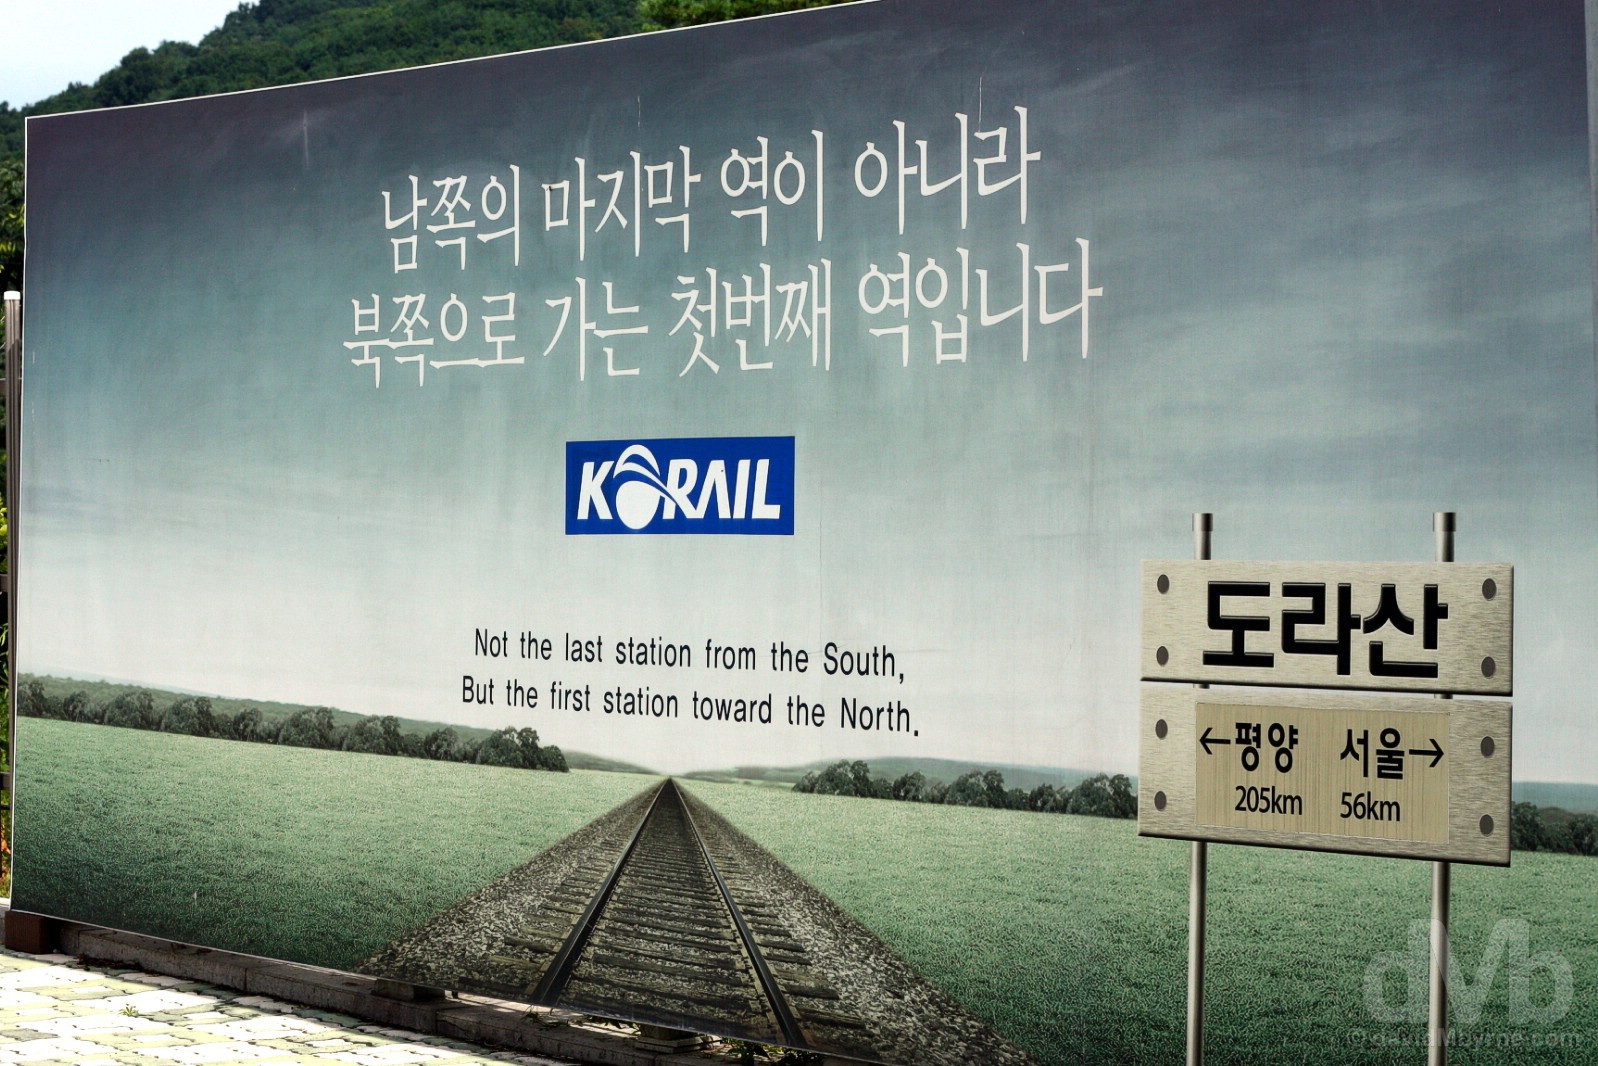 The first station toward the North. 205km to Pyeongyang, North Korea. Dorasan Station, South Korea. August 21, 2009.